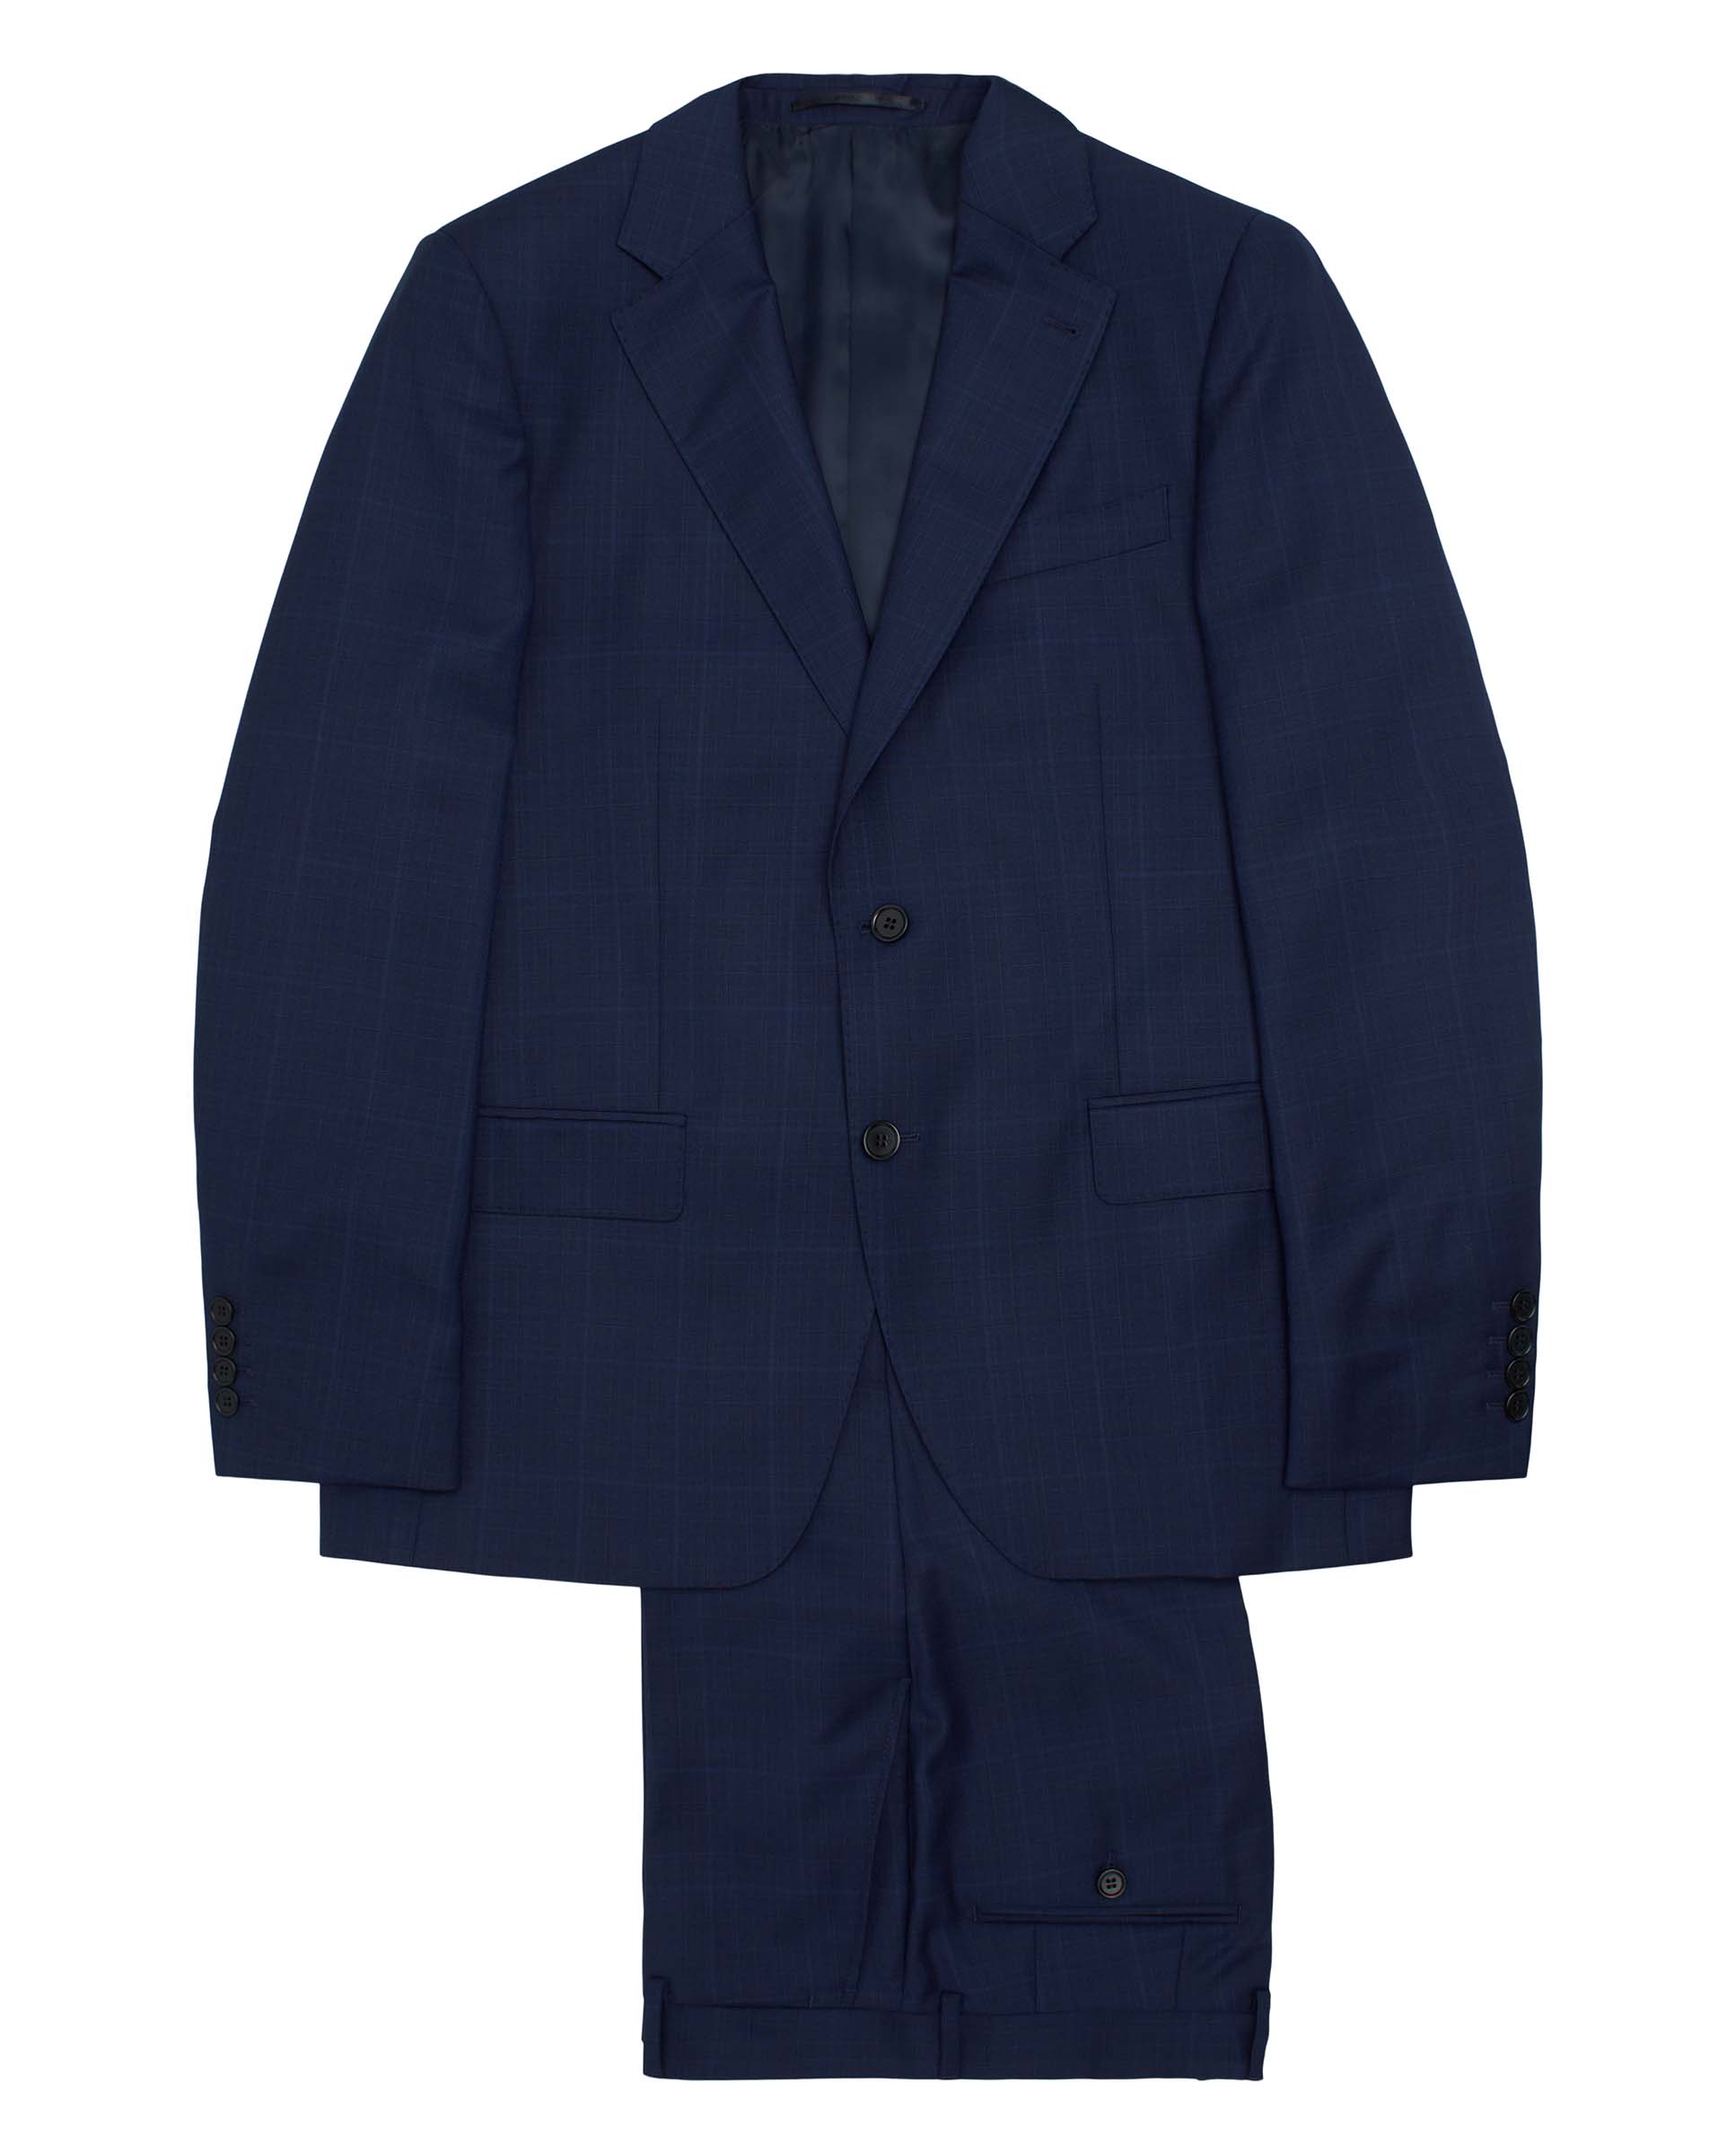 Royal blue wool plaid suit by MIRTO